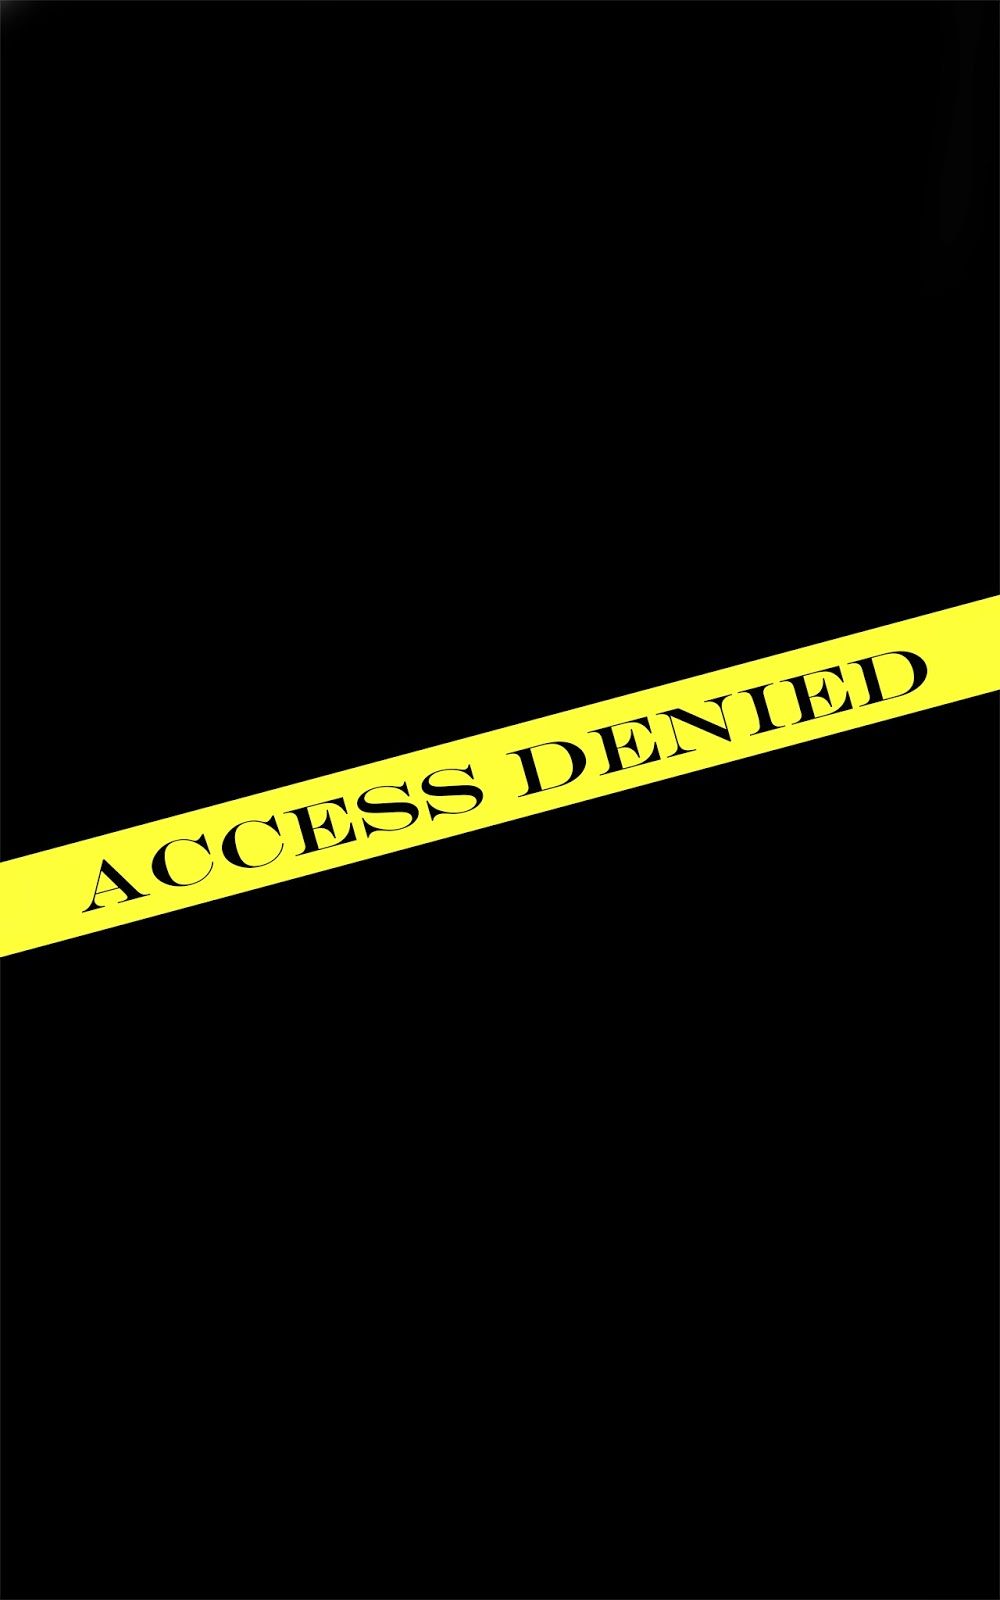 Access Denied wallpaper for mobile